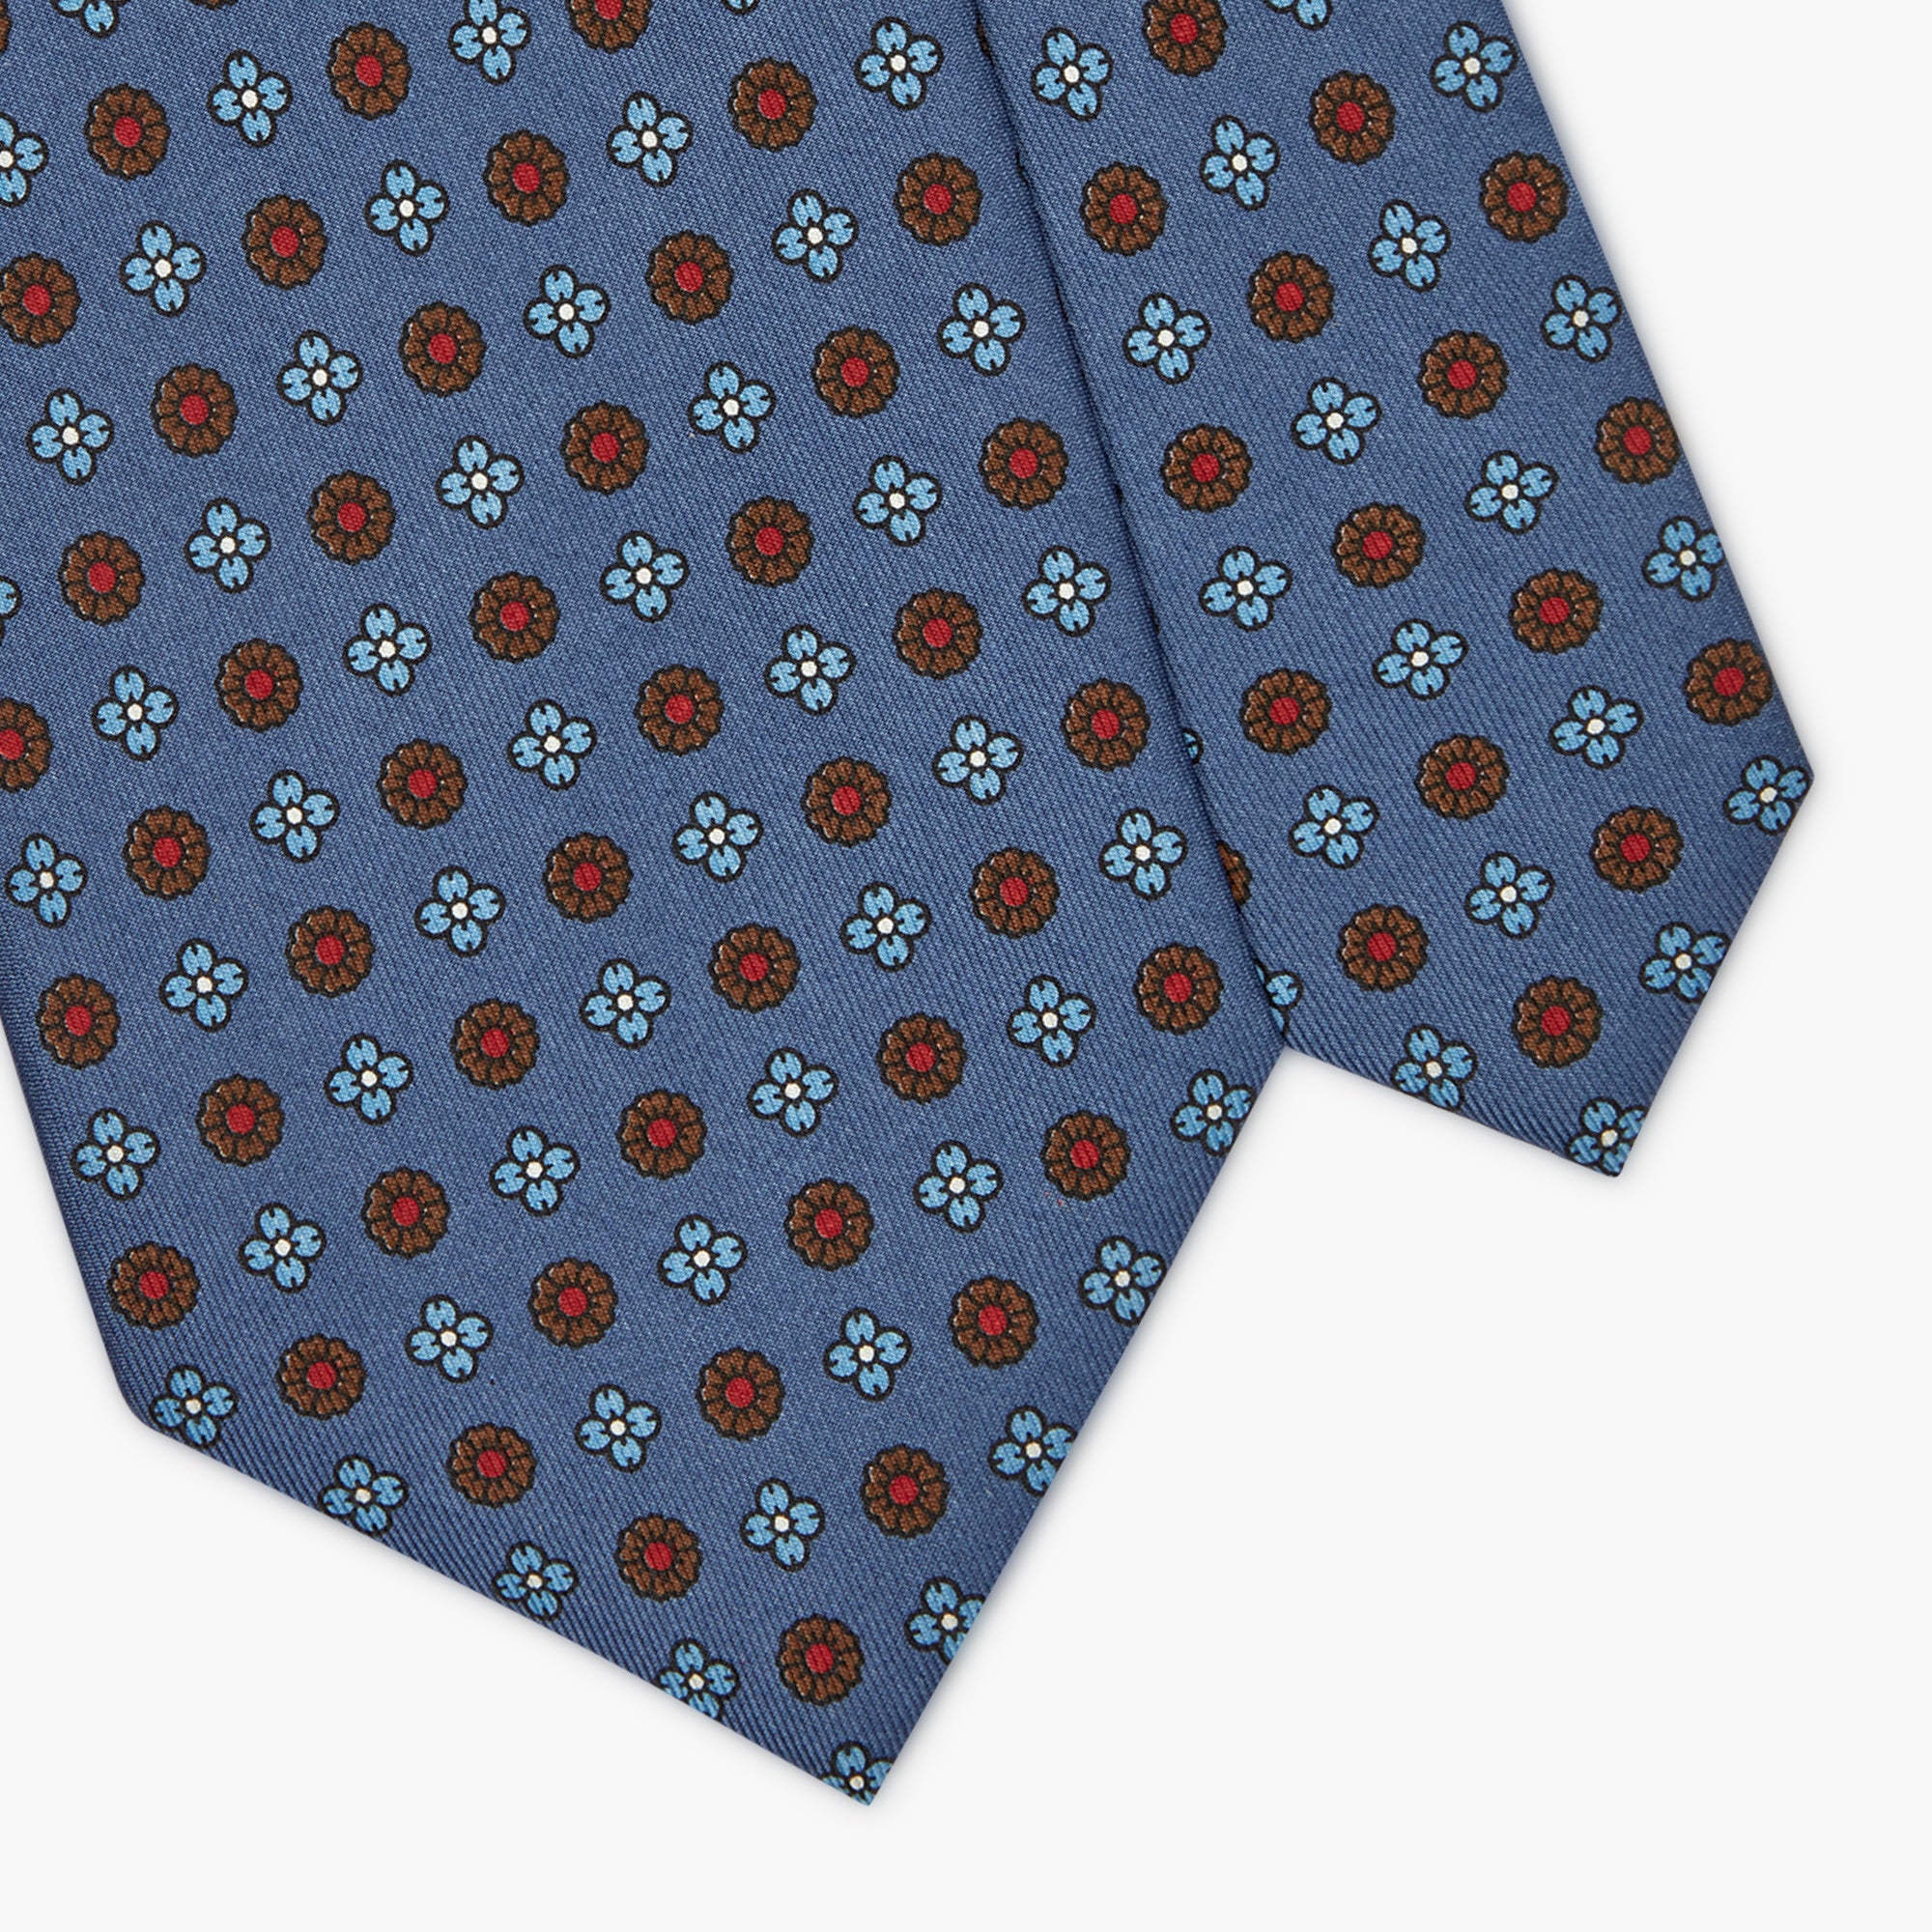 7-Fold Floral Printed English Silk Tie - Cobalt Blue